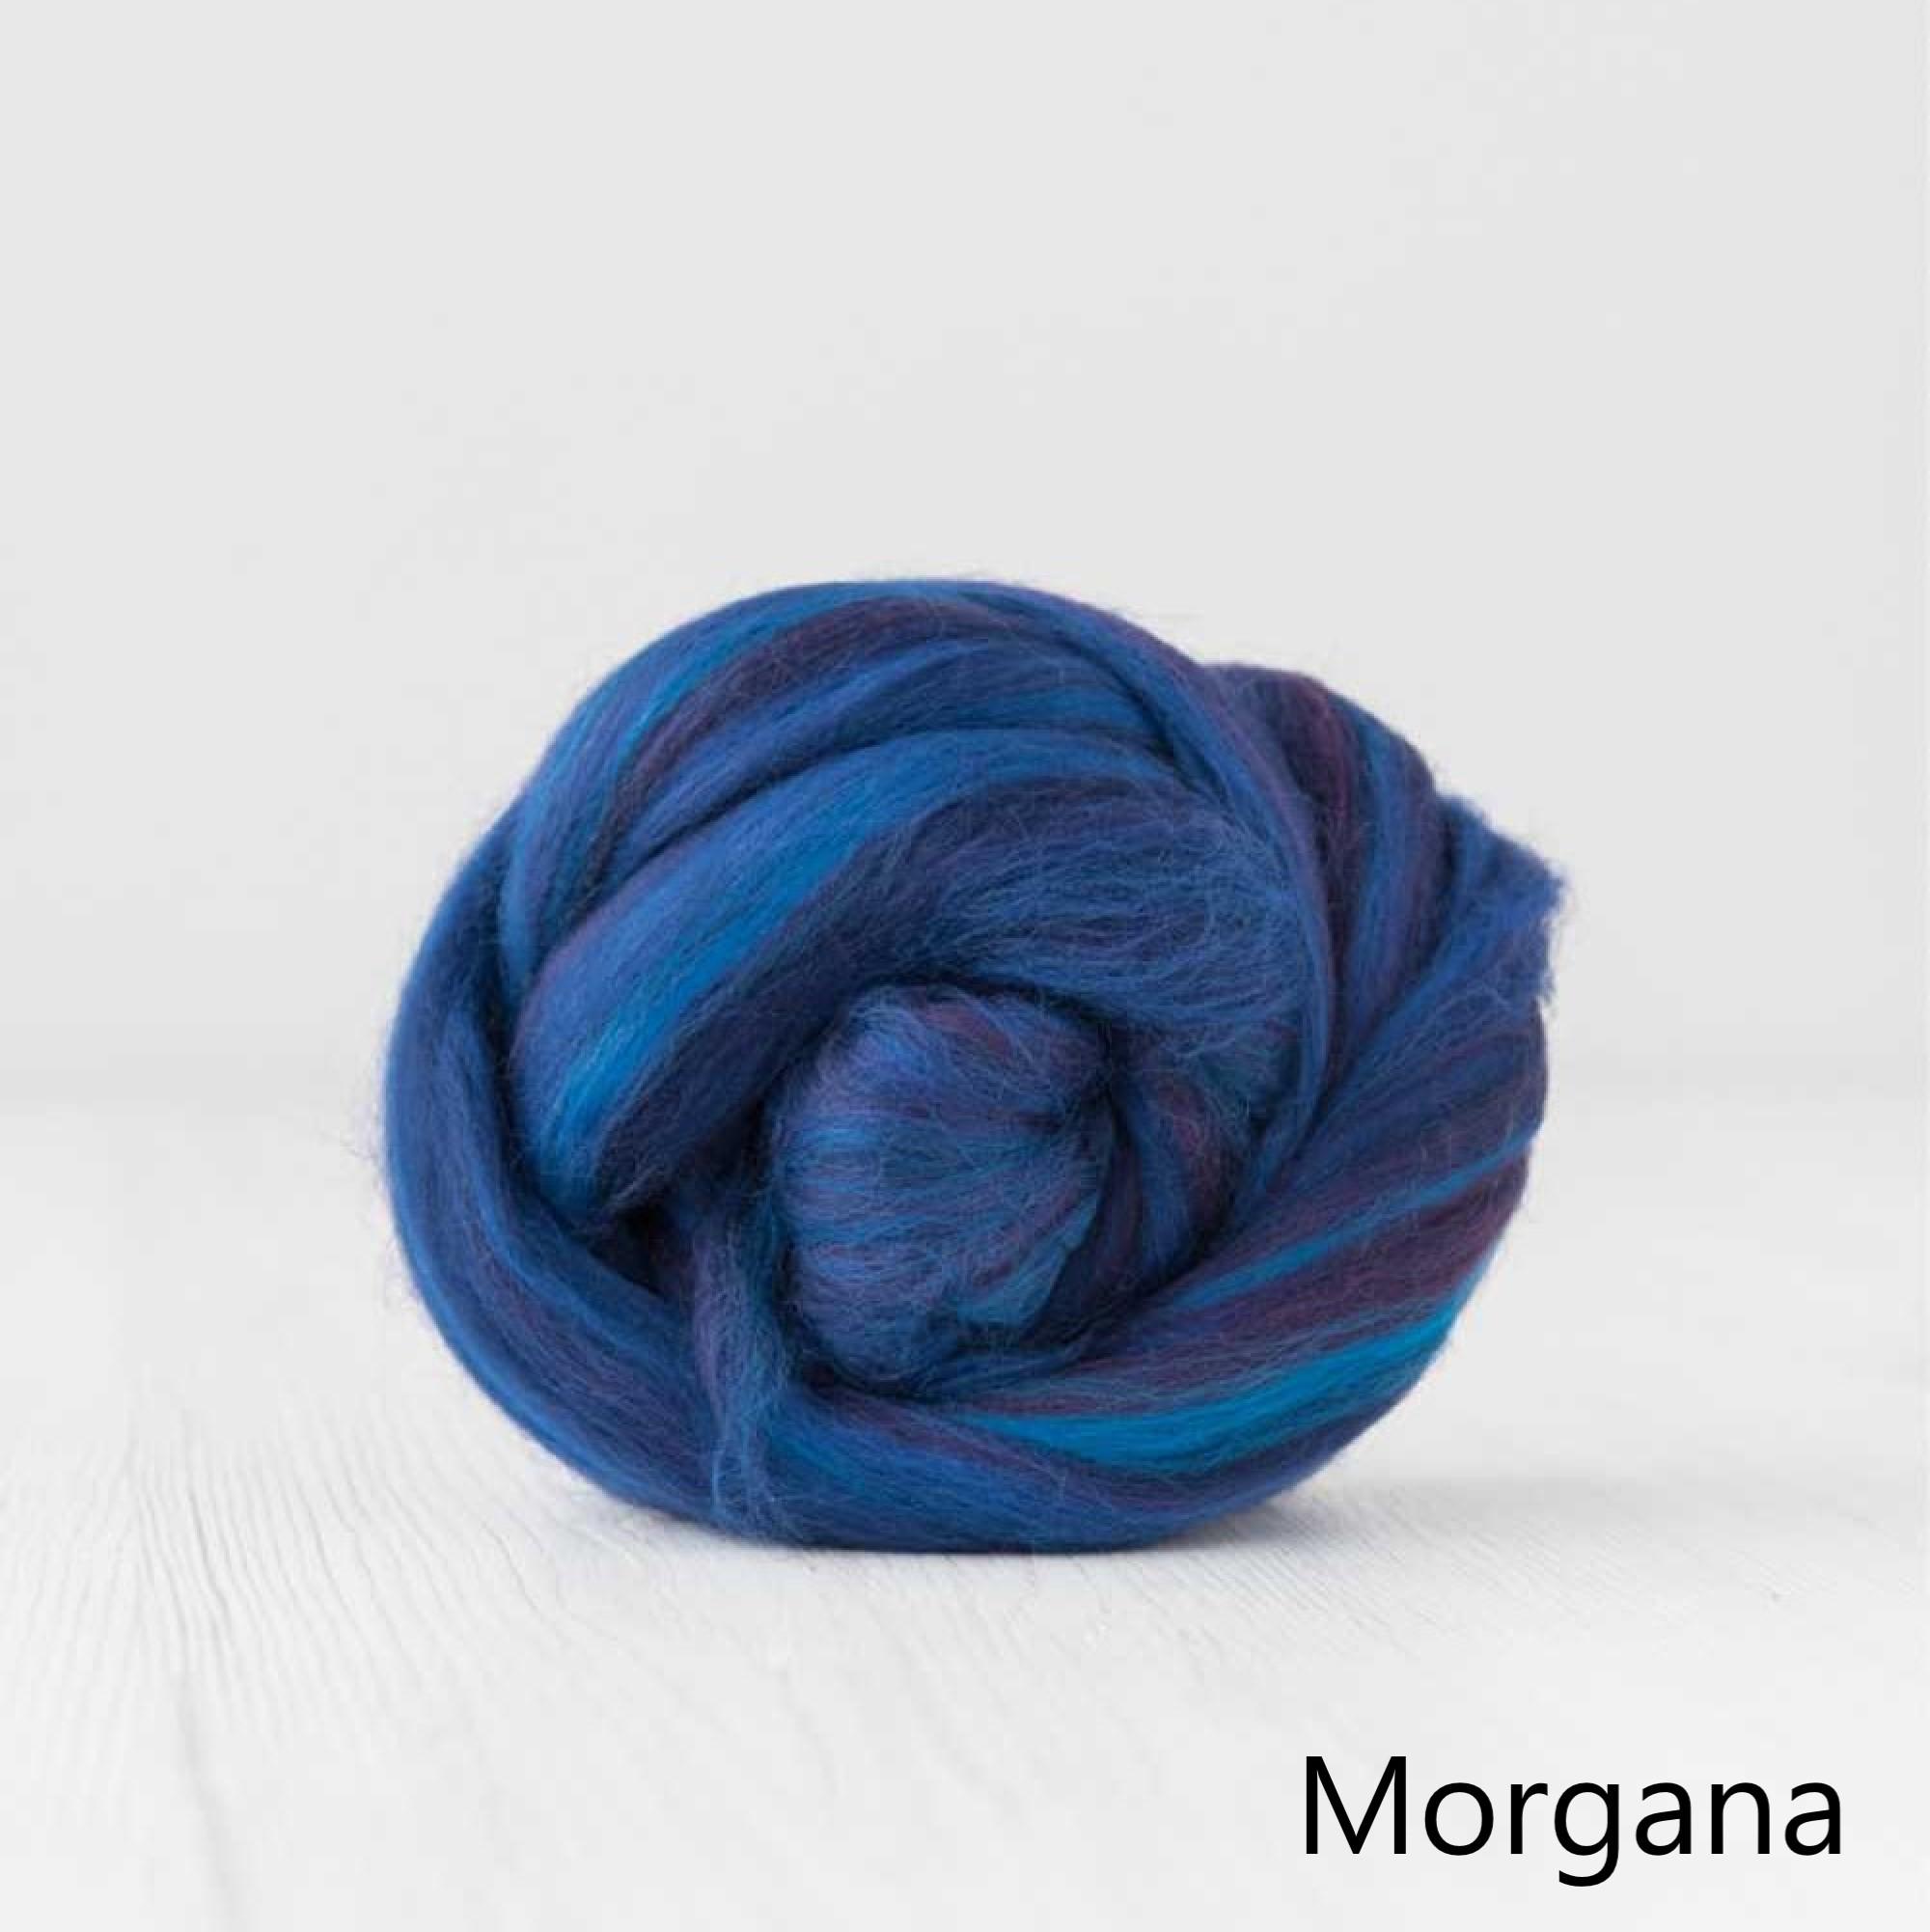 Morgana Merino and Silk Roving